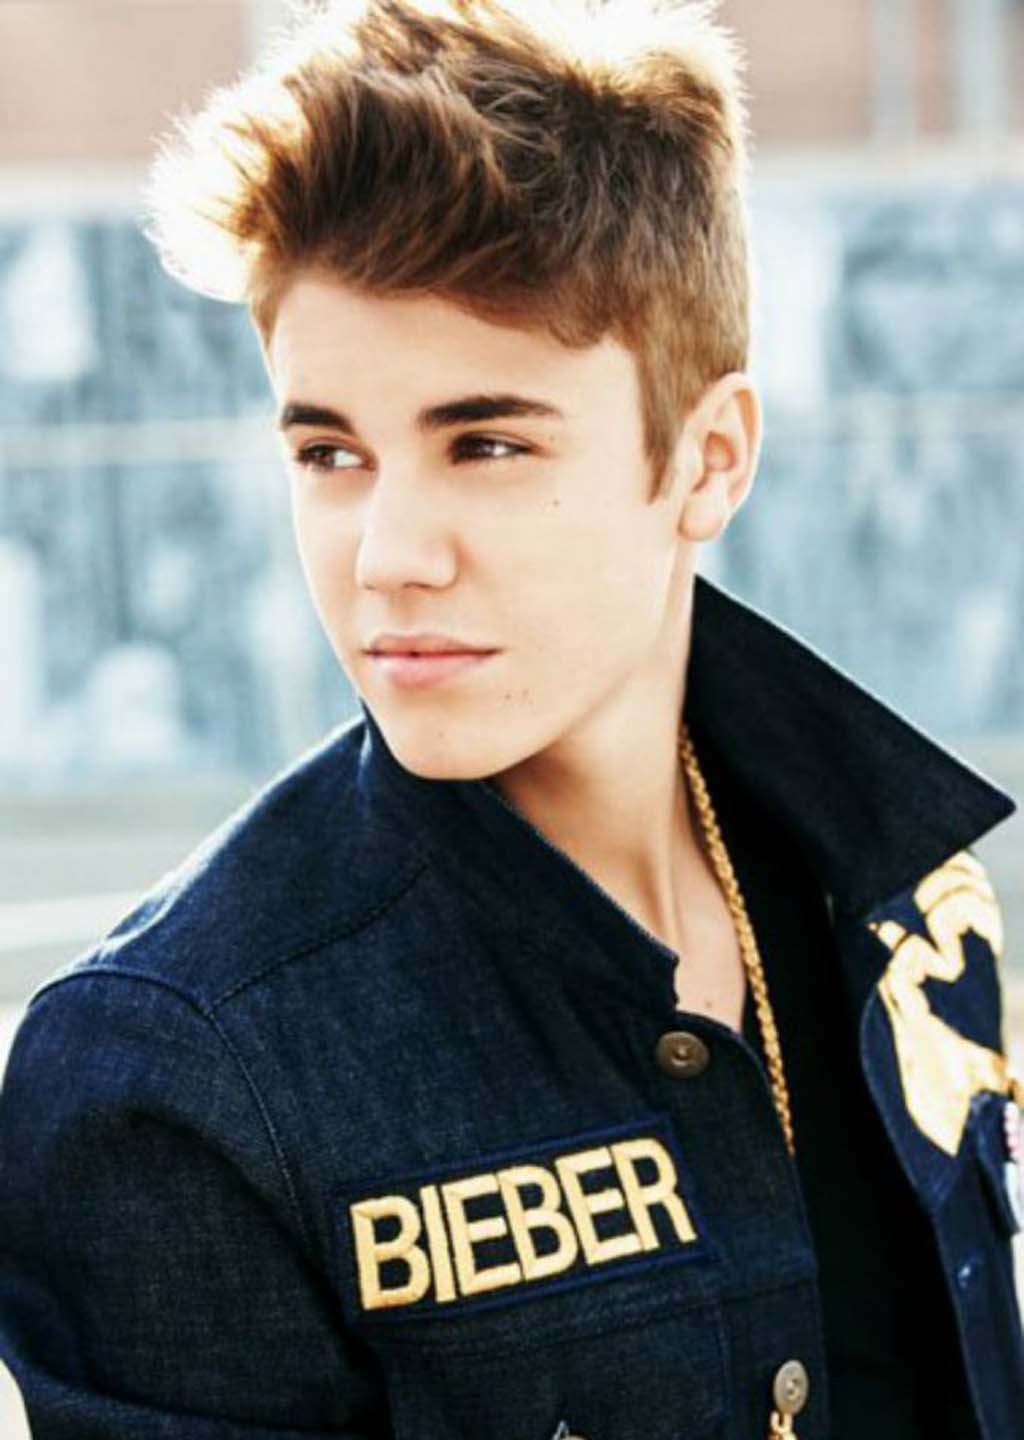 believe（Justin Bieber2012同名专辑《Believe》） - 搜狗百科